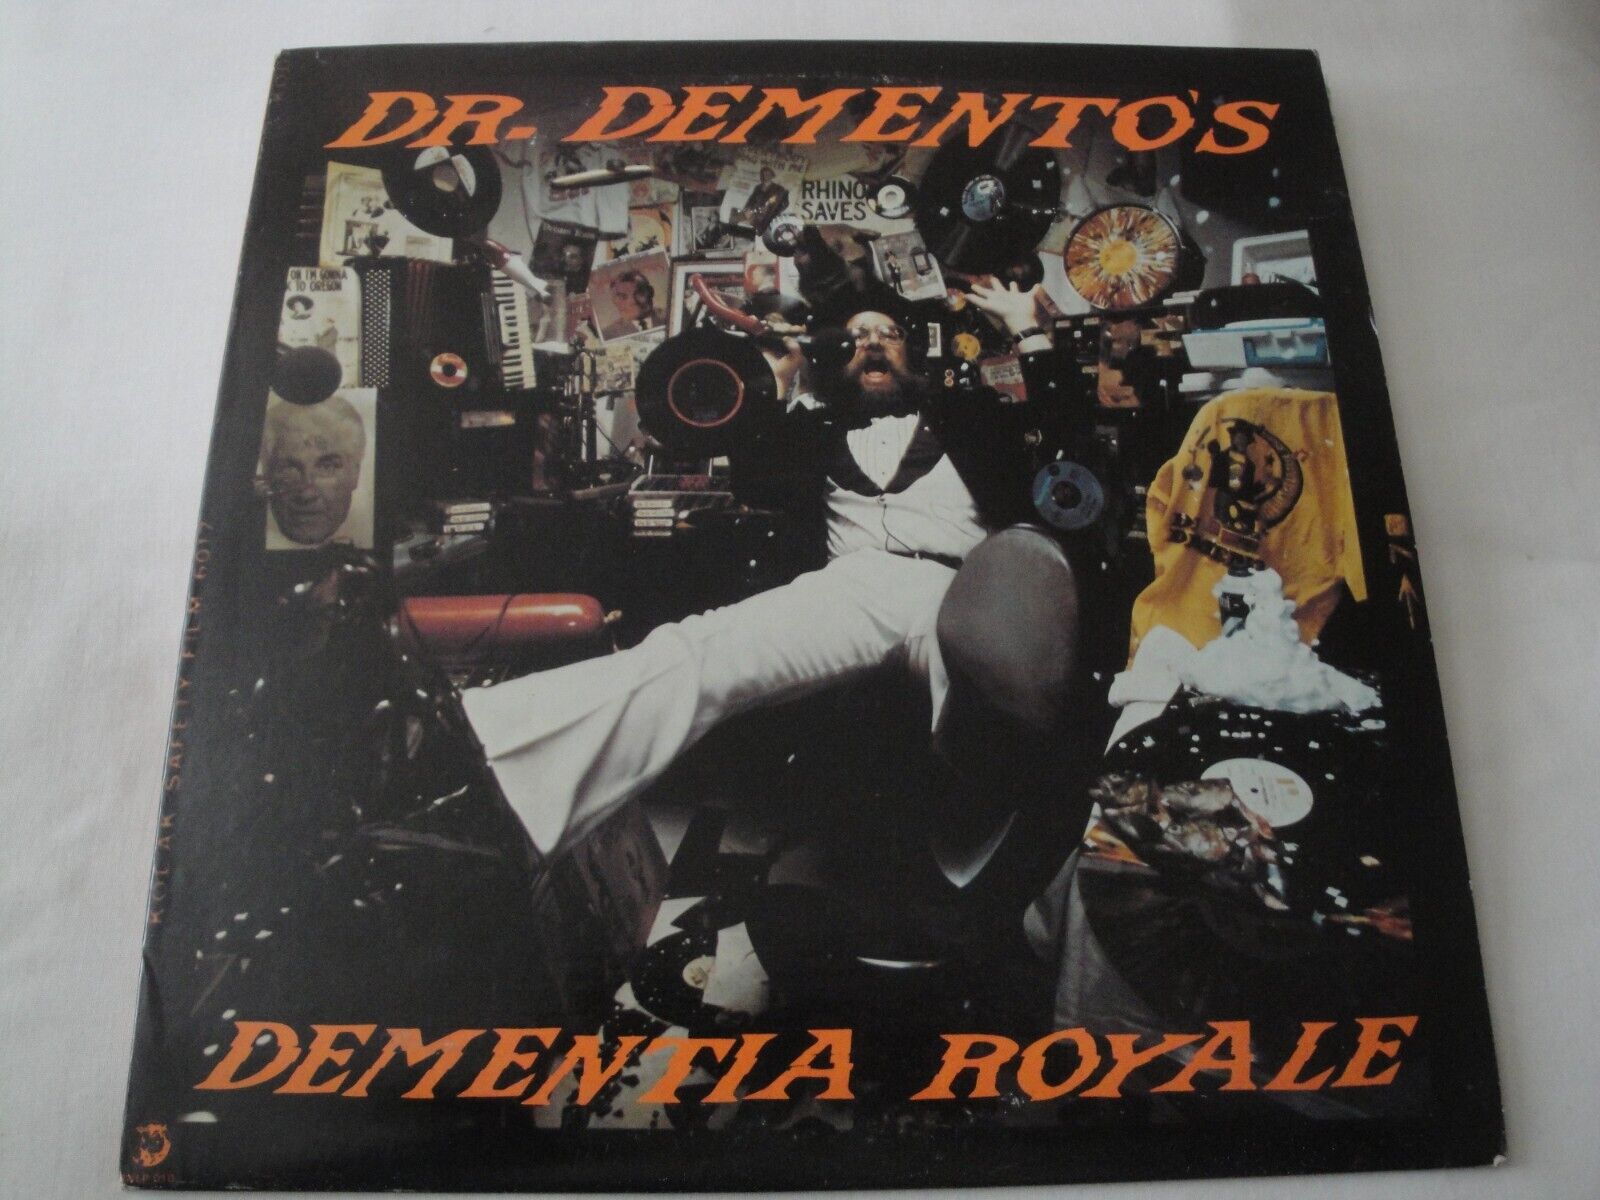 Dr. Demento's Dementia Royale VINYL LP ALBUM  1980 RHINO RECORDS